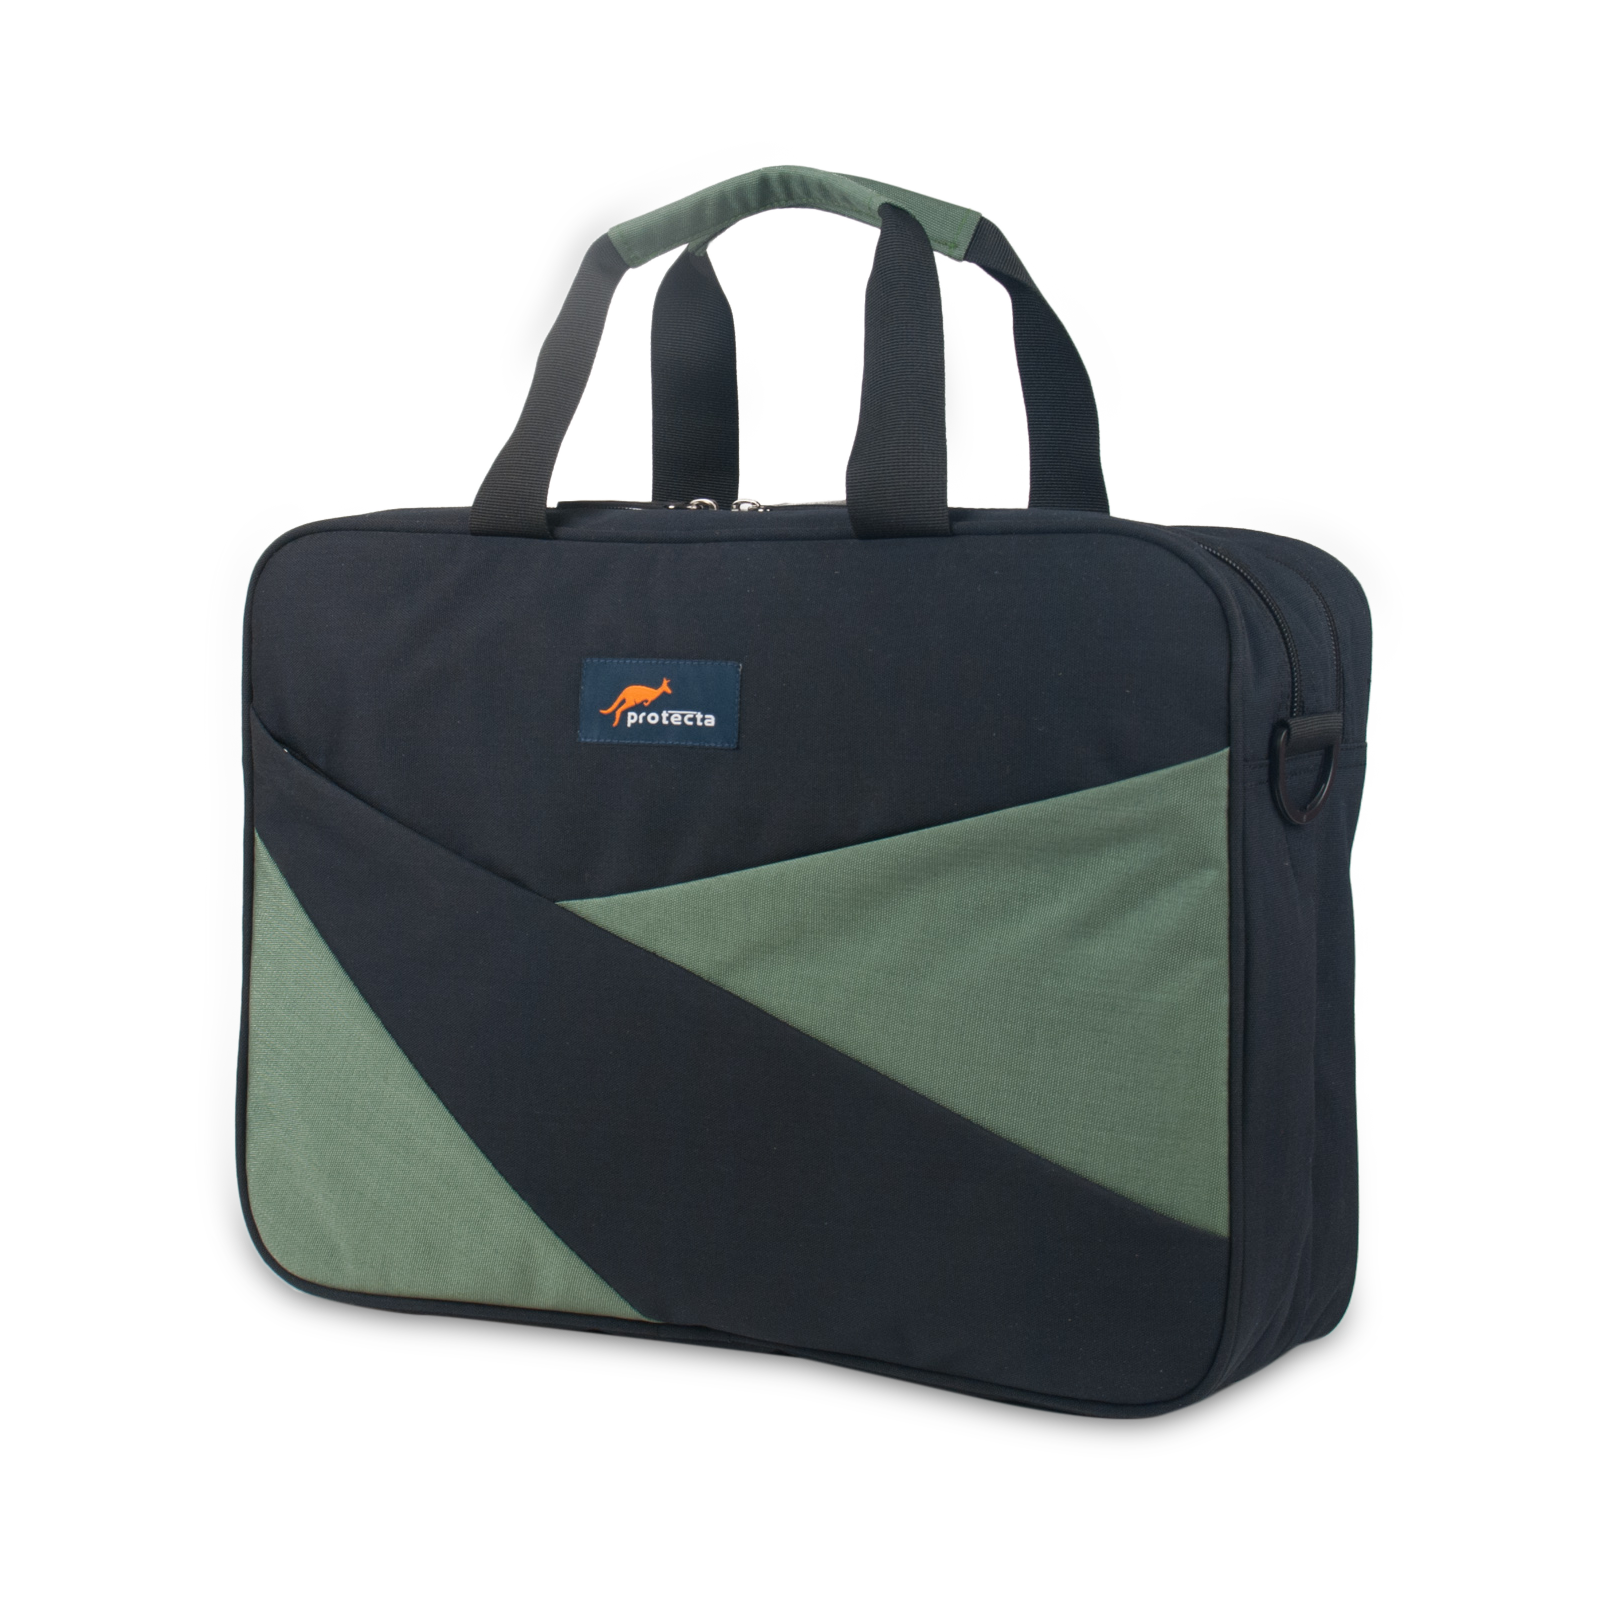 Protect Road Warrior Laptop Bag Black-Green- 2